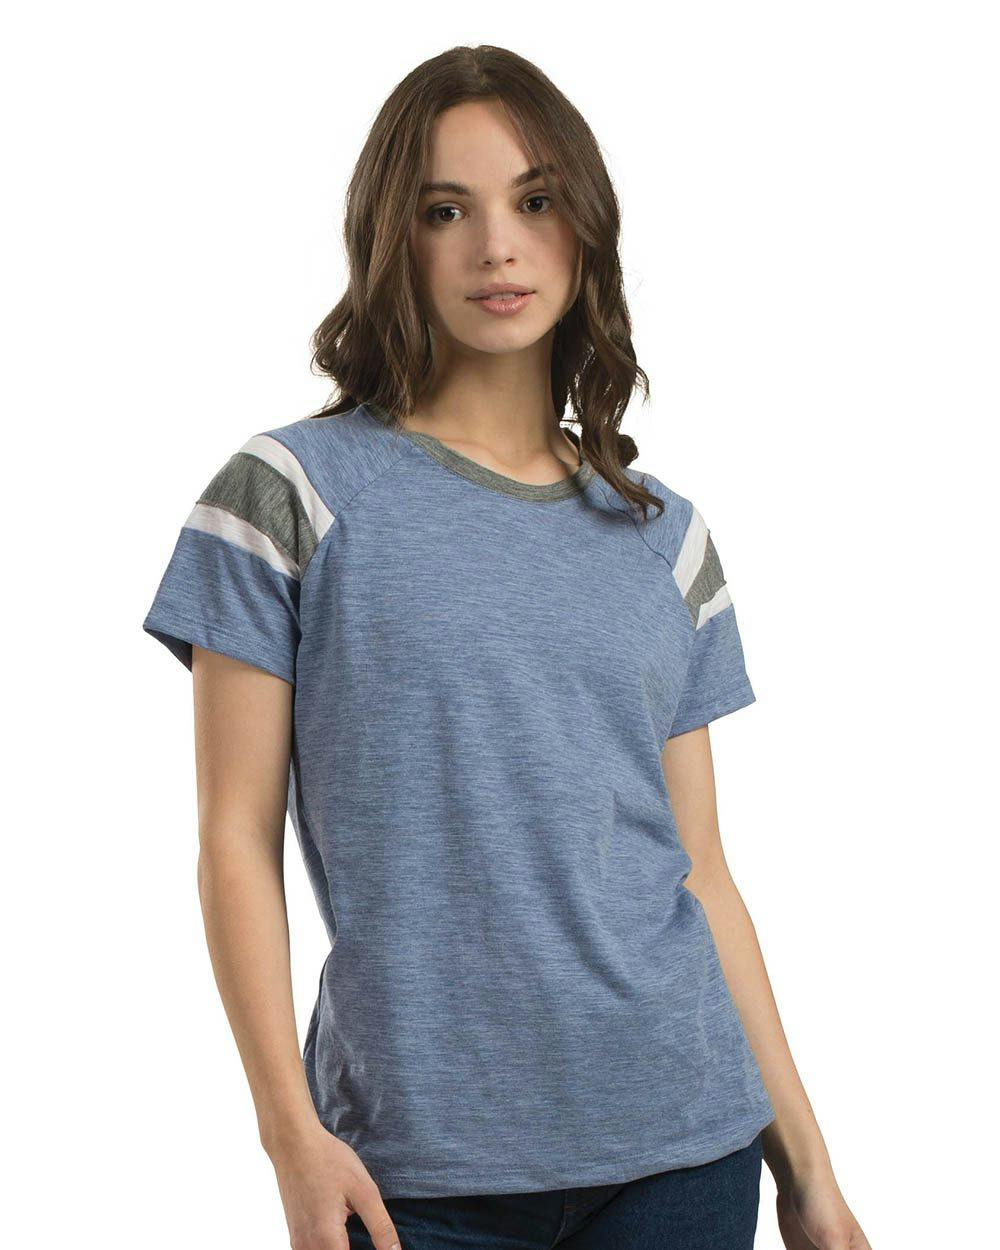 Image for Women's Short Sleeve Fanatic T-Shirt - 3011